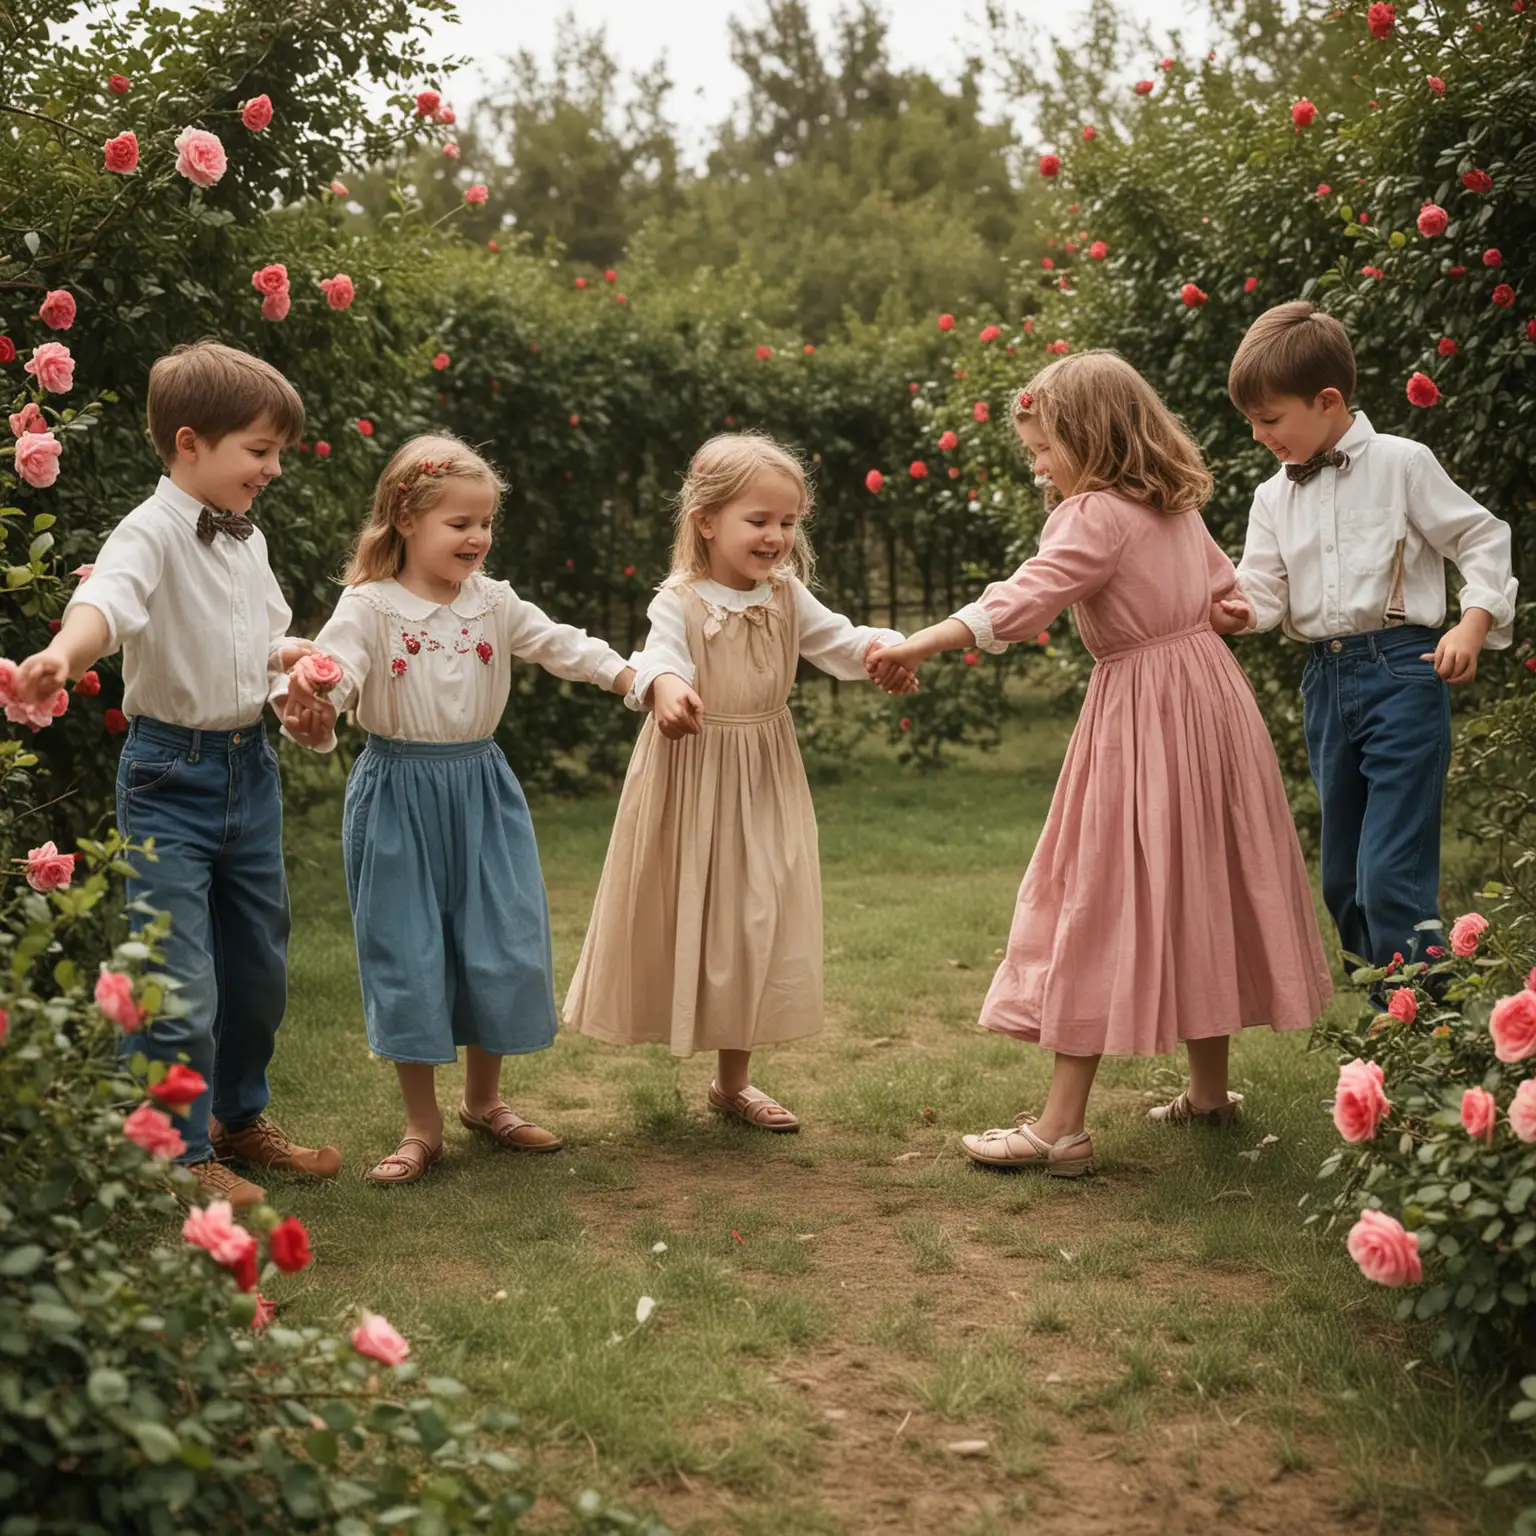 Joyful Children Dancing Around a Blooming Rose Bush